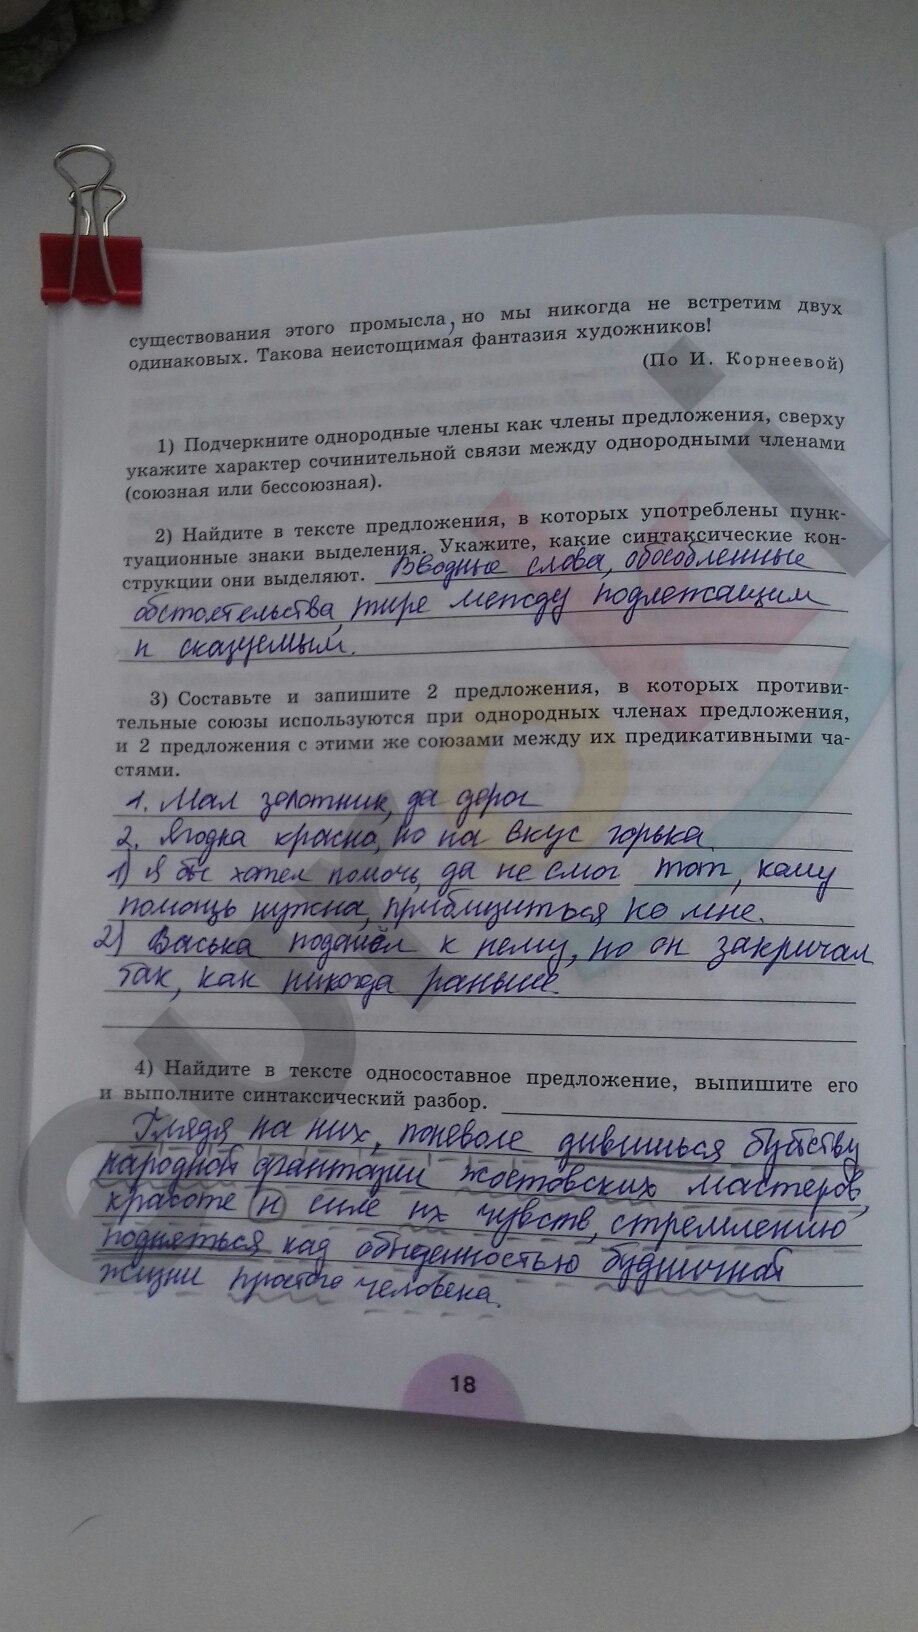 гдз 8 класс рабочая тетрадь часть 2 страница 18 русский язык Рыбченкова, Александрова